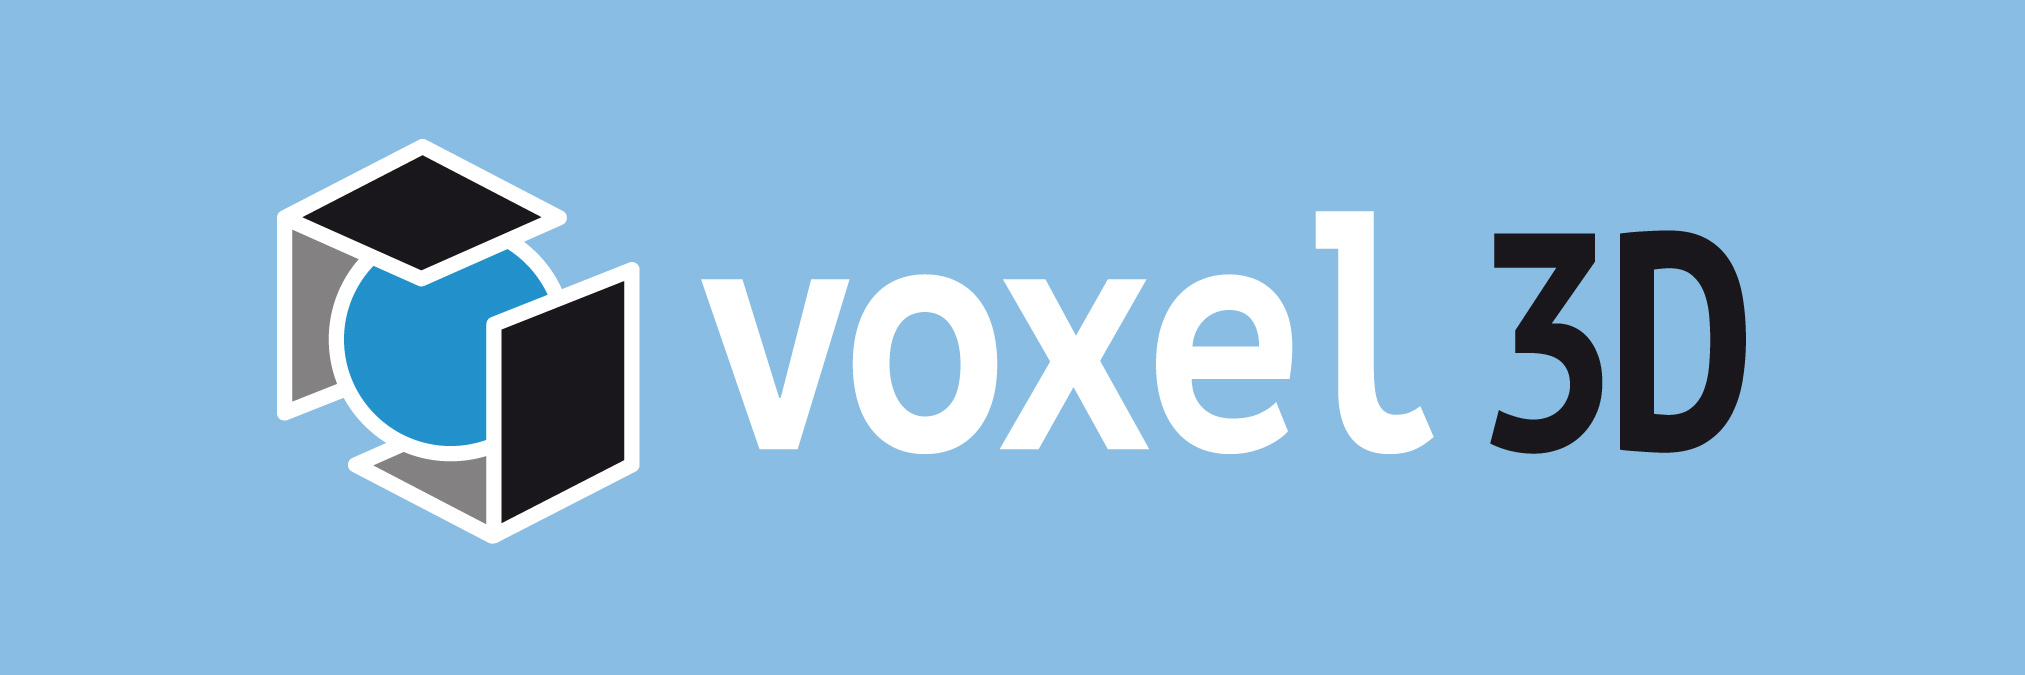 Voxel 3d